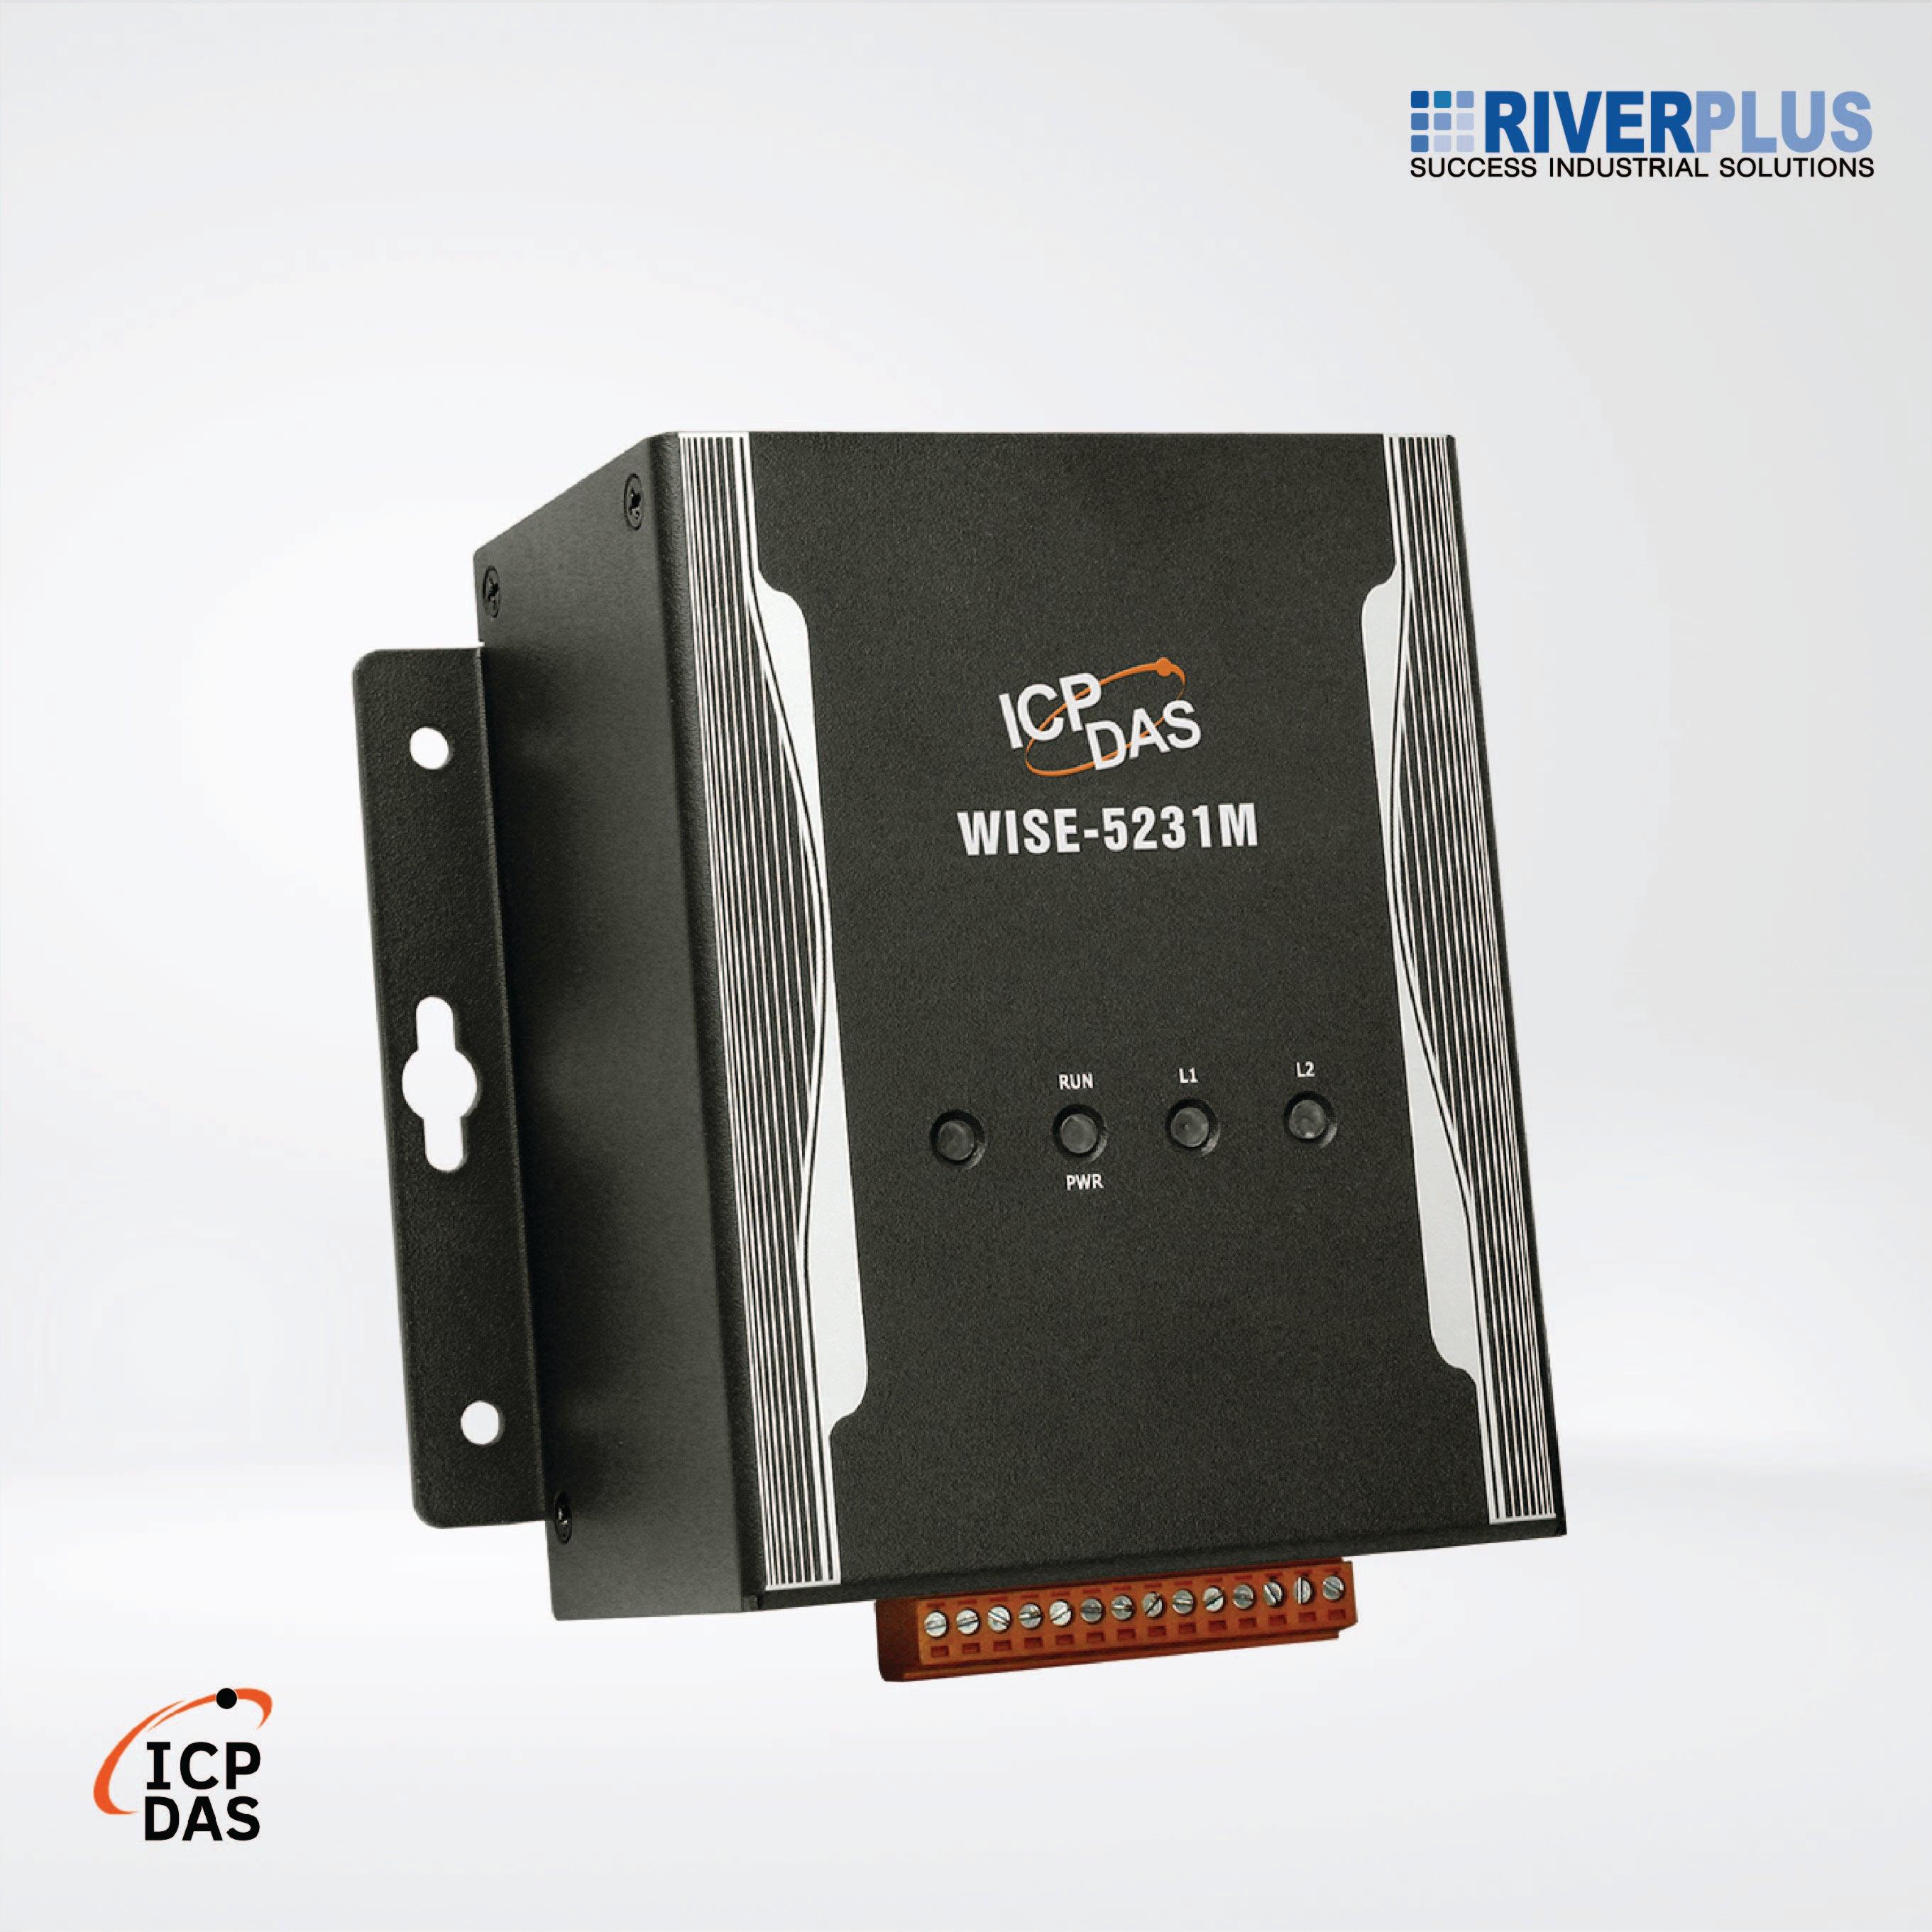 WISE-5231M Intelligent IIoT Edge Controller - Riverplus